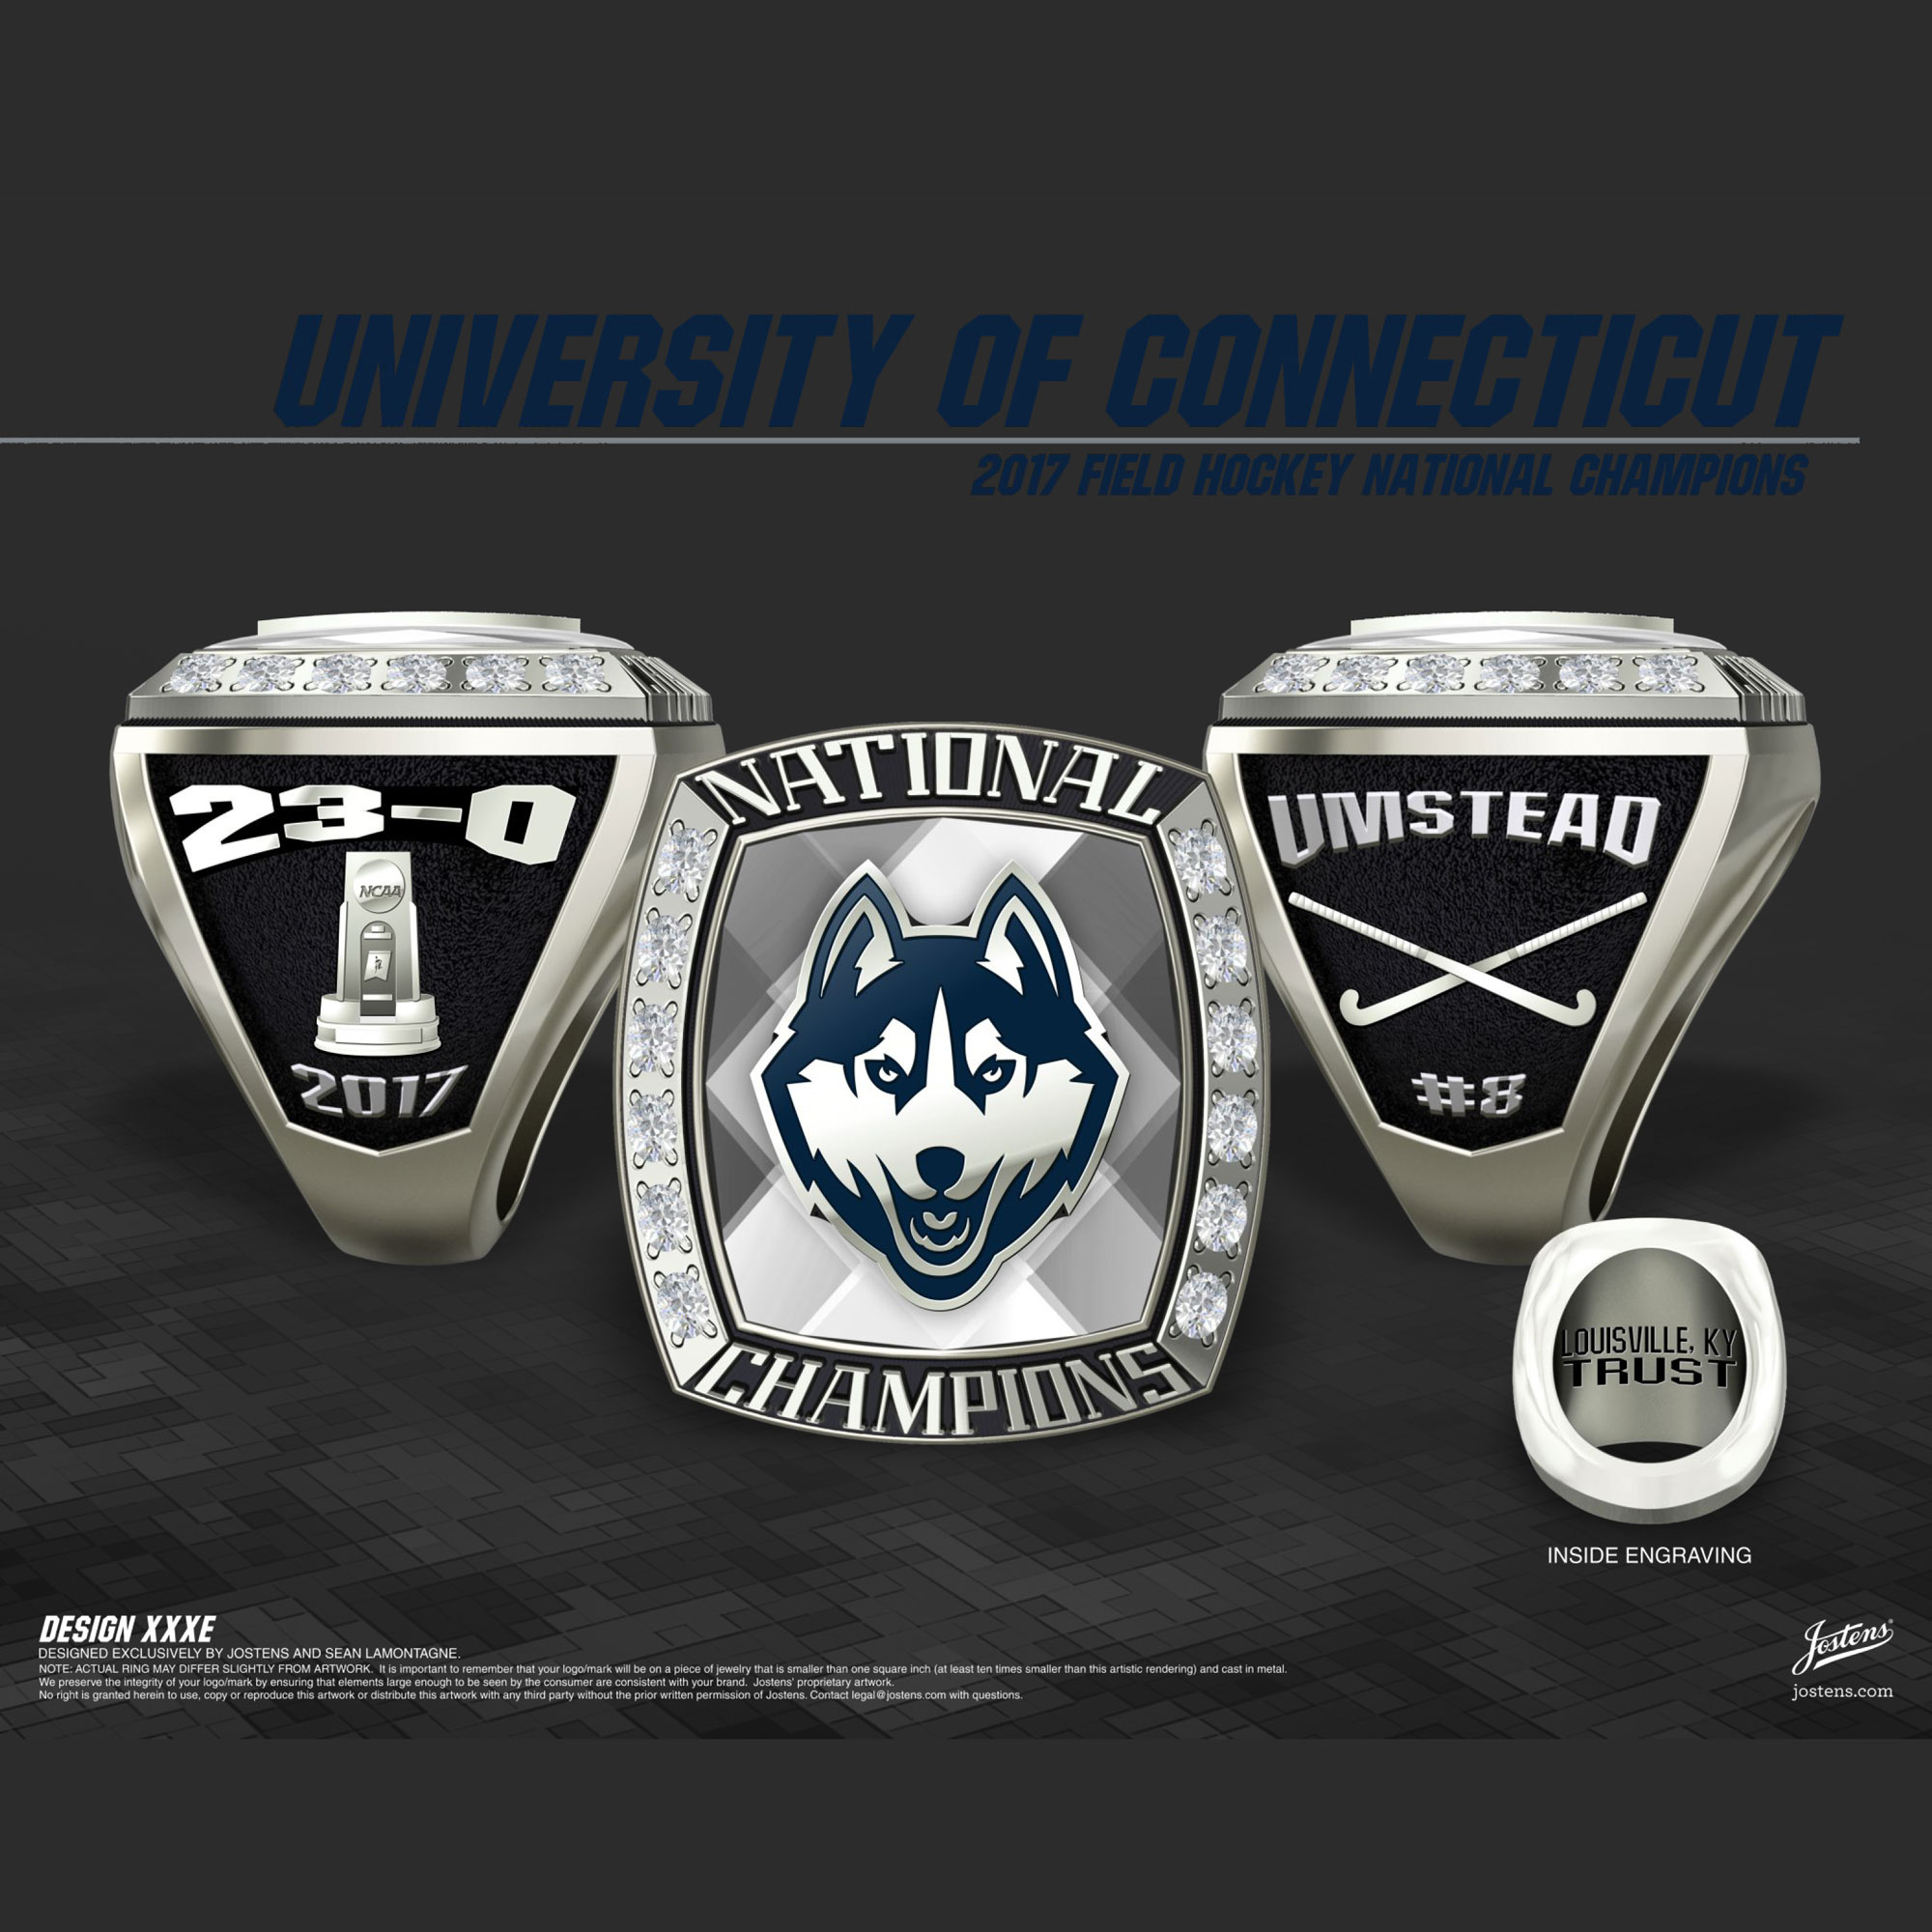 University of Connecticut Women's Field Hockey 2017 National Championship Ring